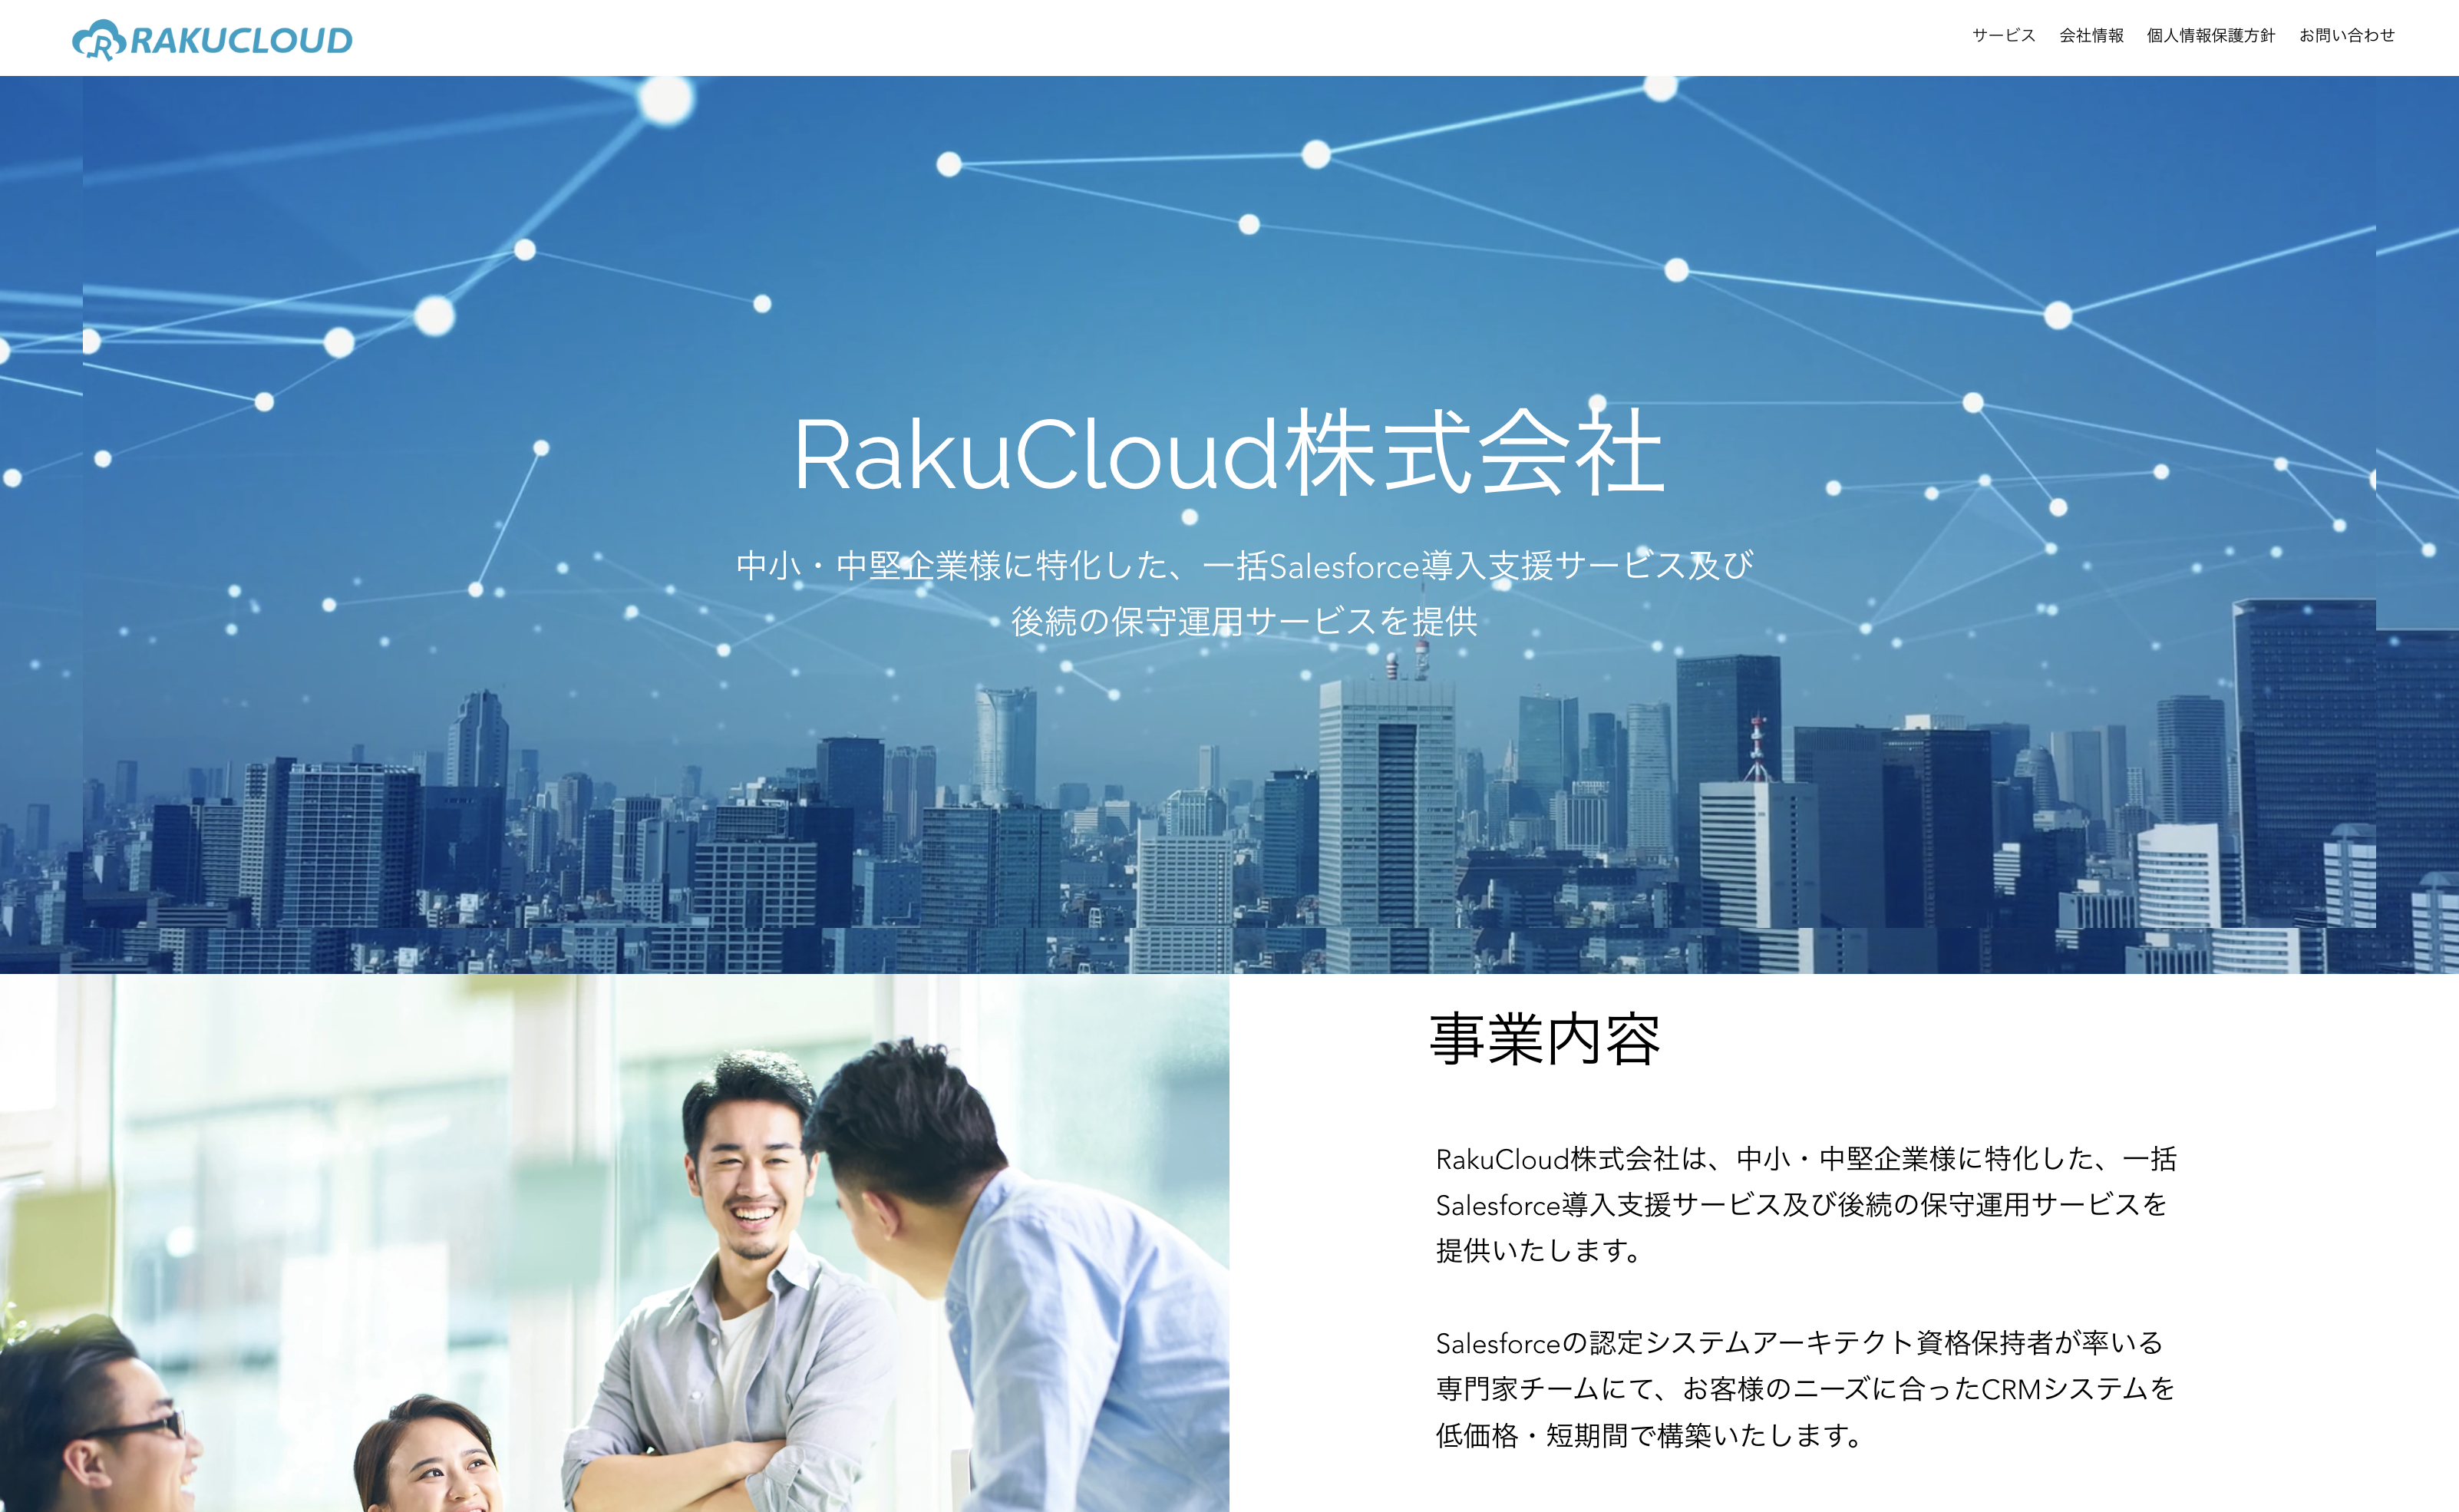 RakuCloud株式会社のRakuCloud株式会社:SFA・CRMサービス